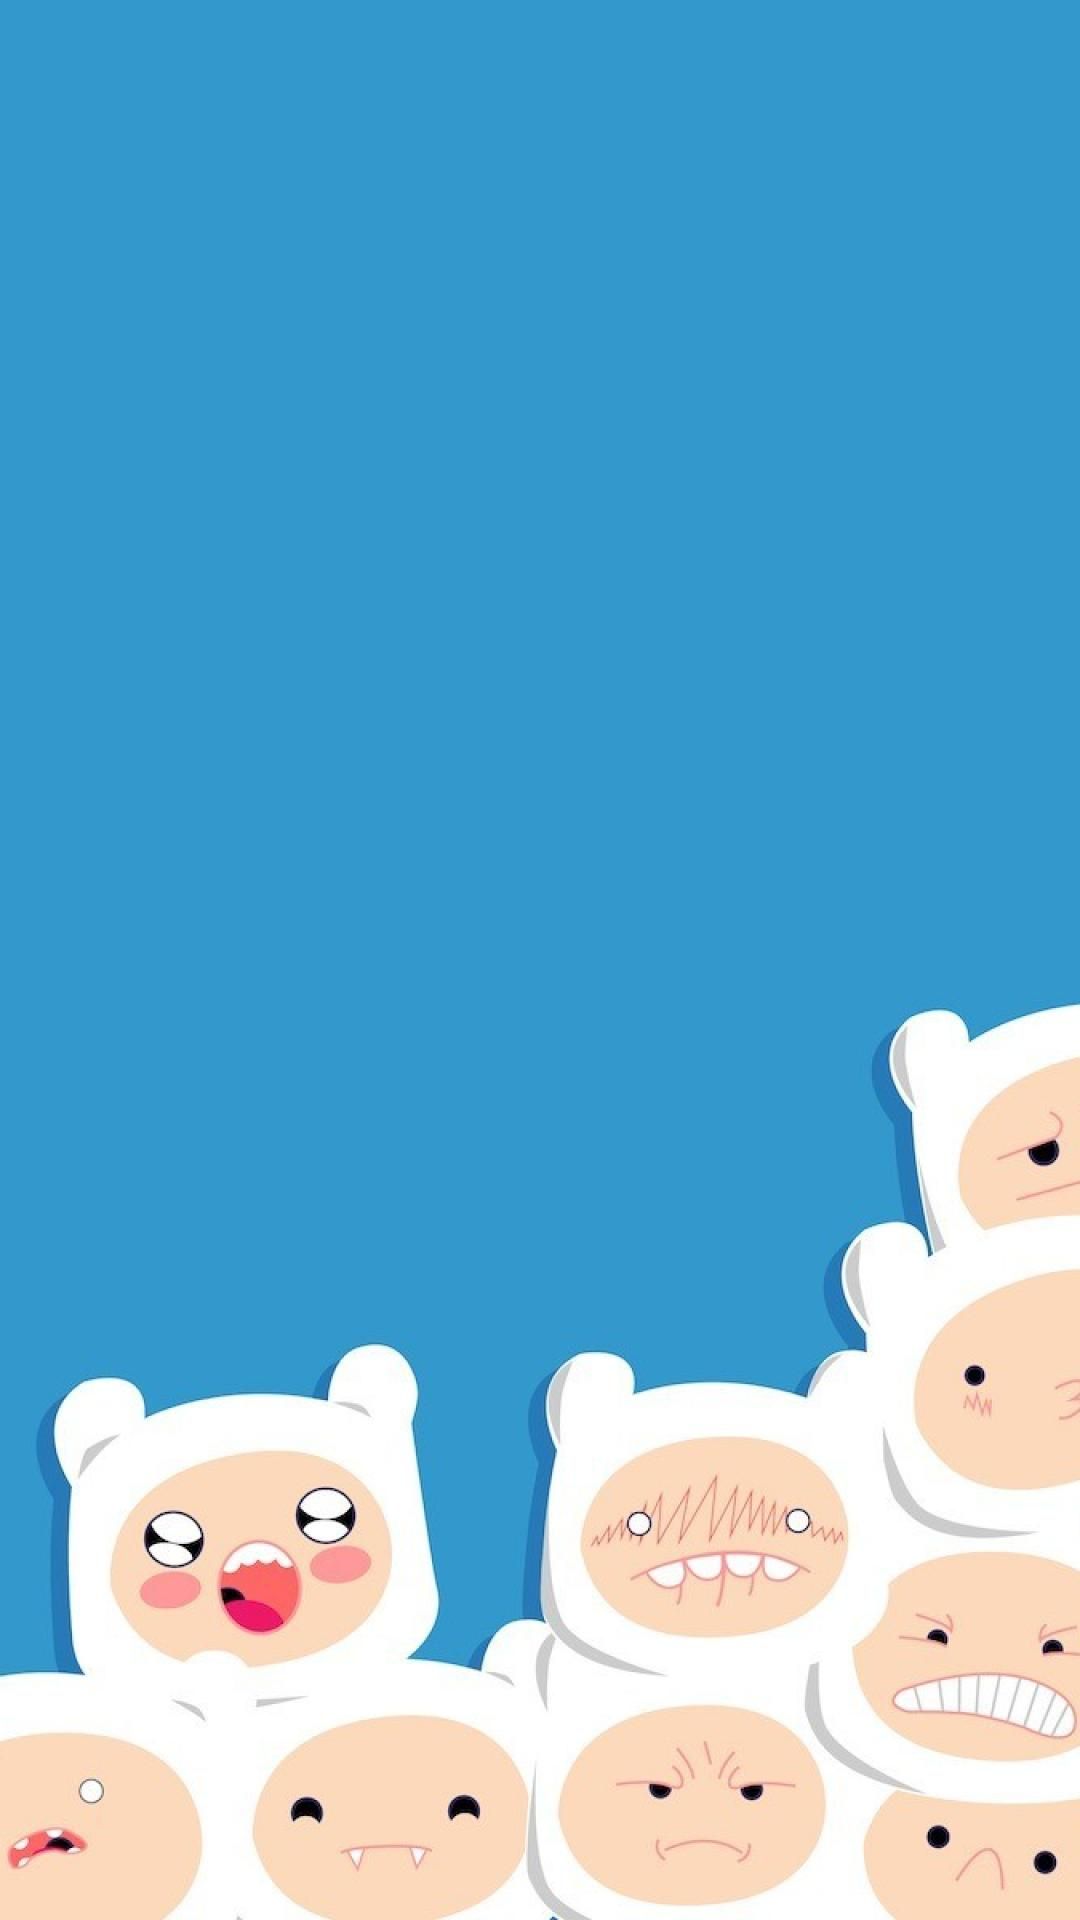 Adventure Time Background for Phones. Summertime Wallpaper, Tax Time Wallpaper and Springtime Desktop Wallpaper